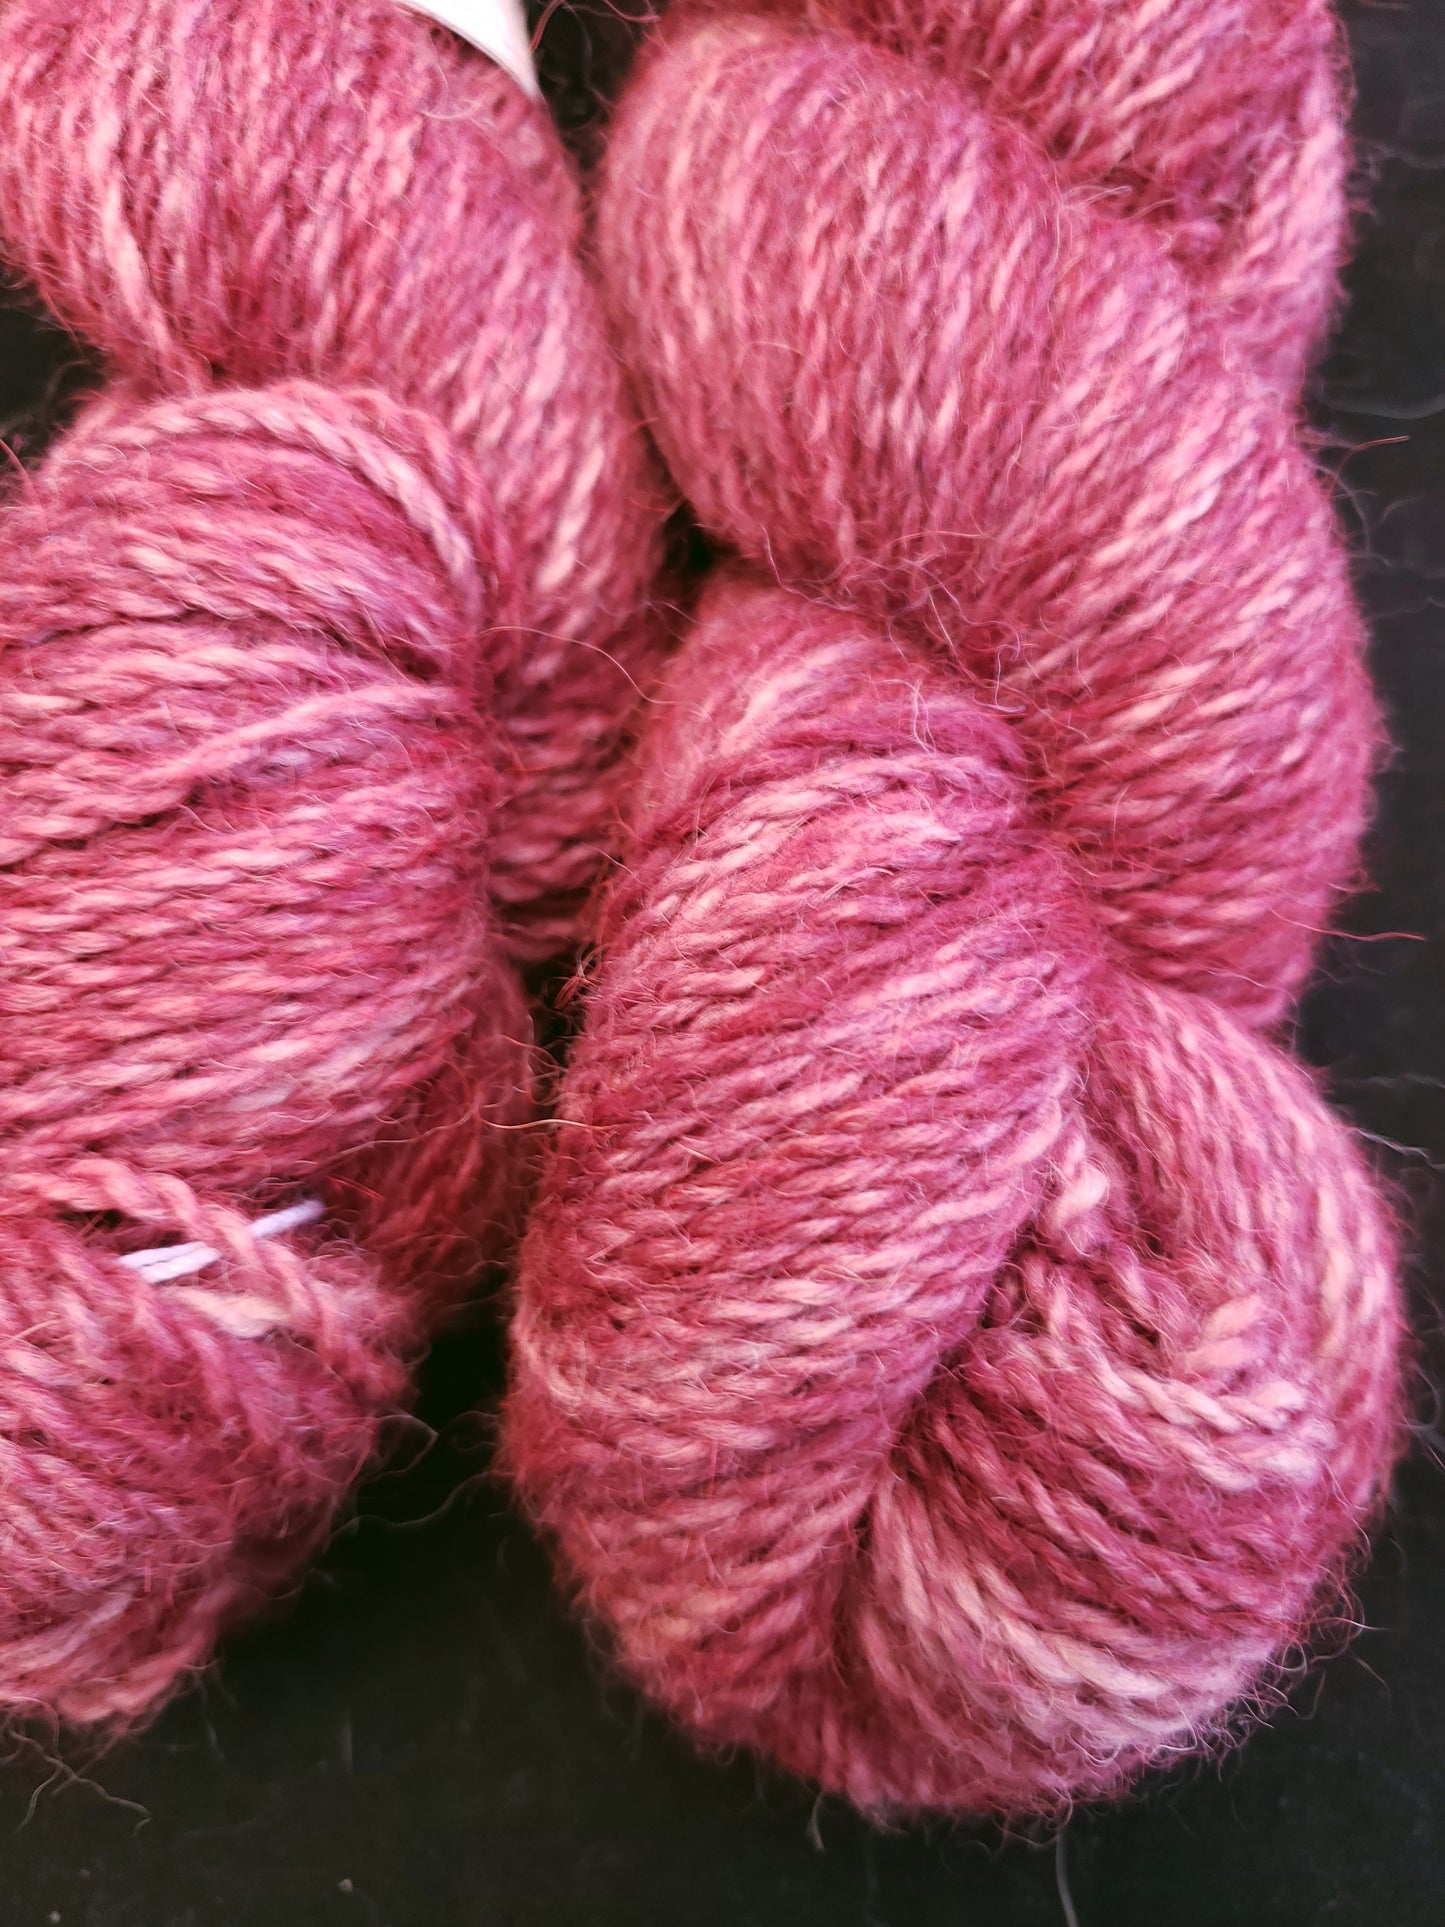 William - Cranberry alpaca yarn